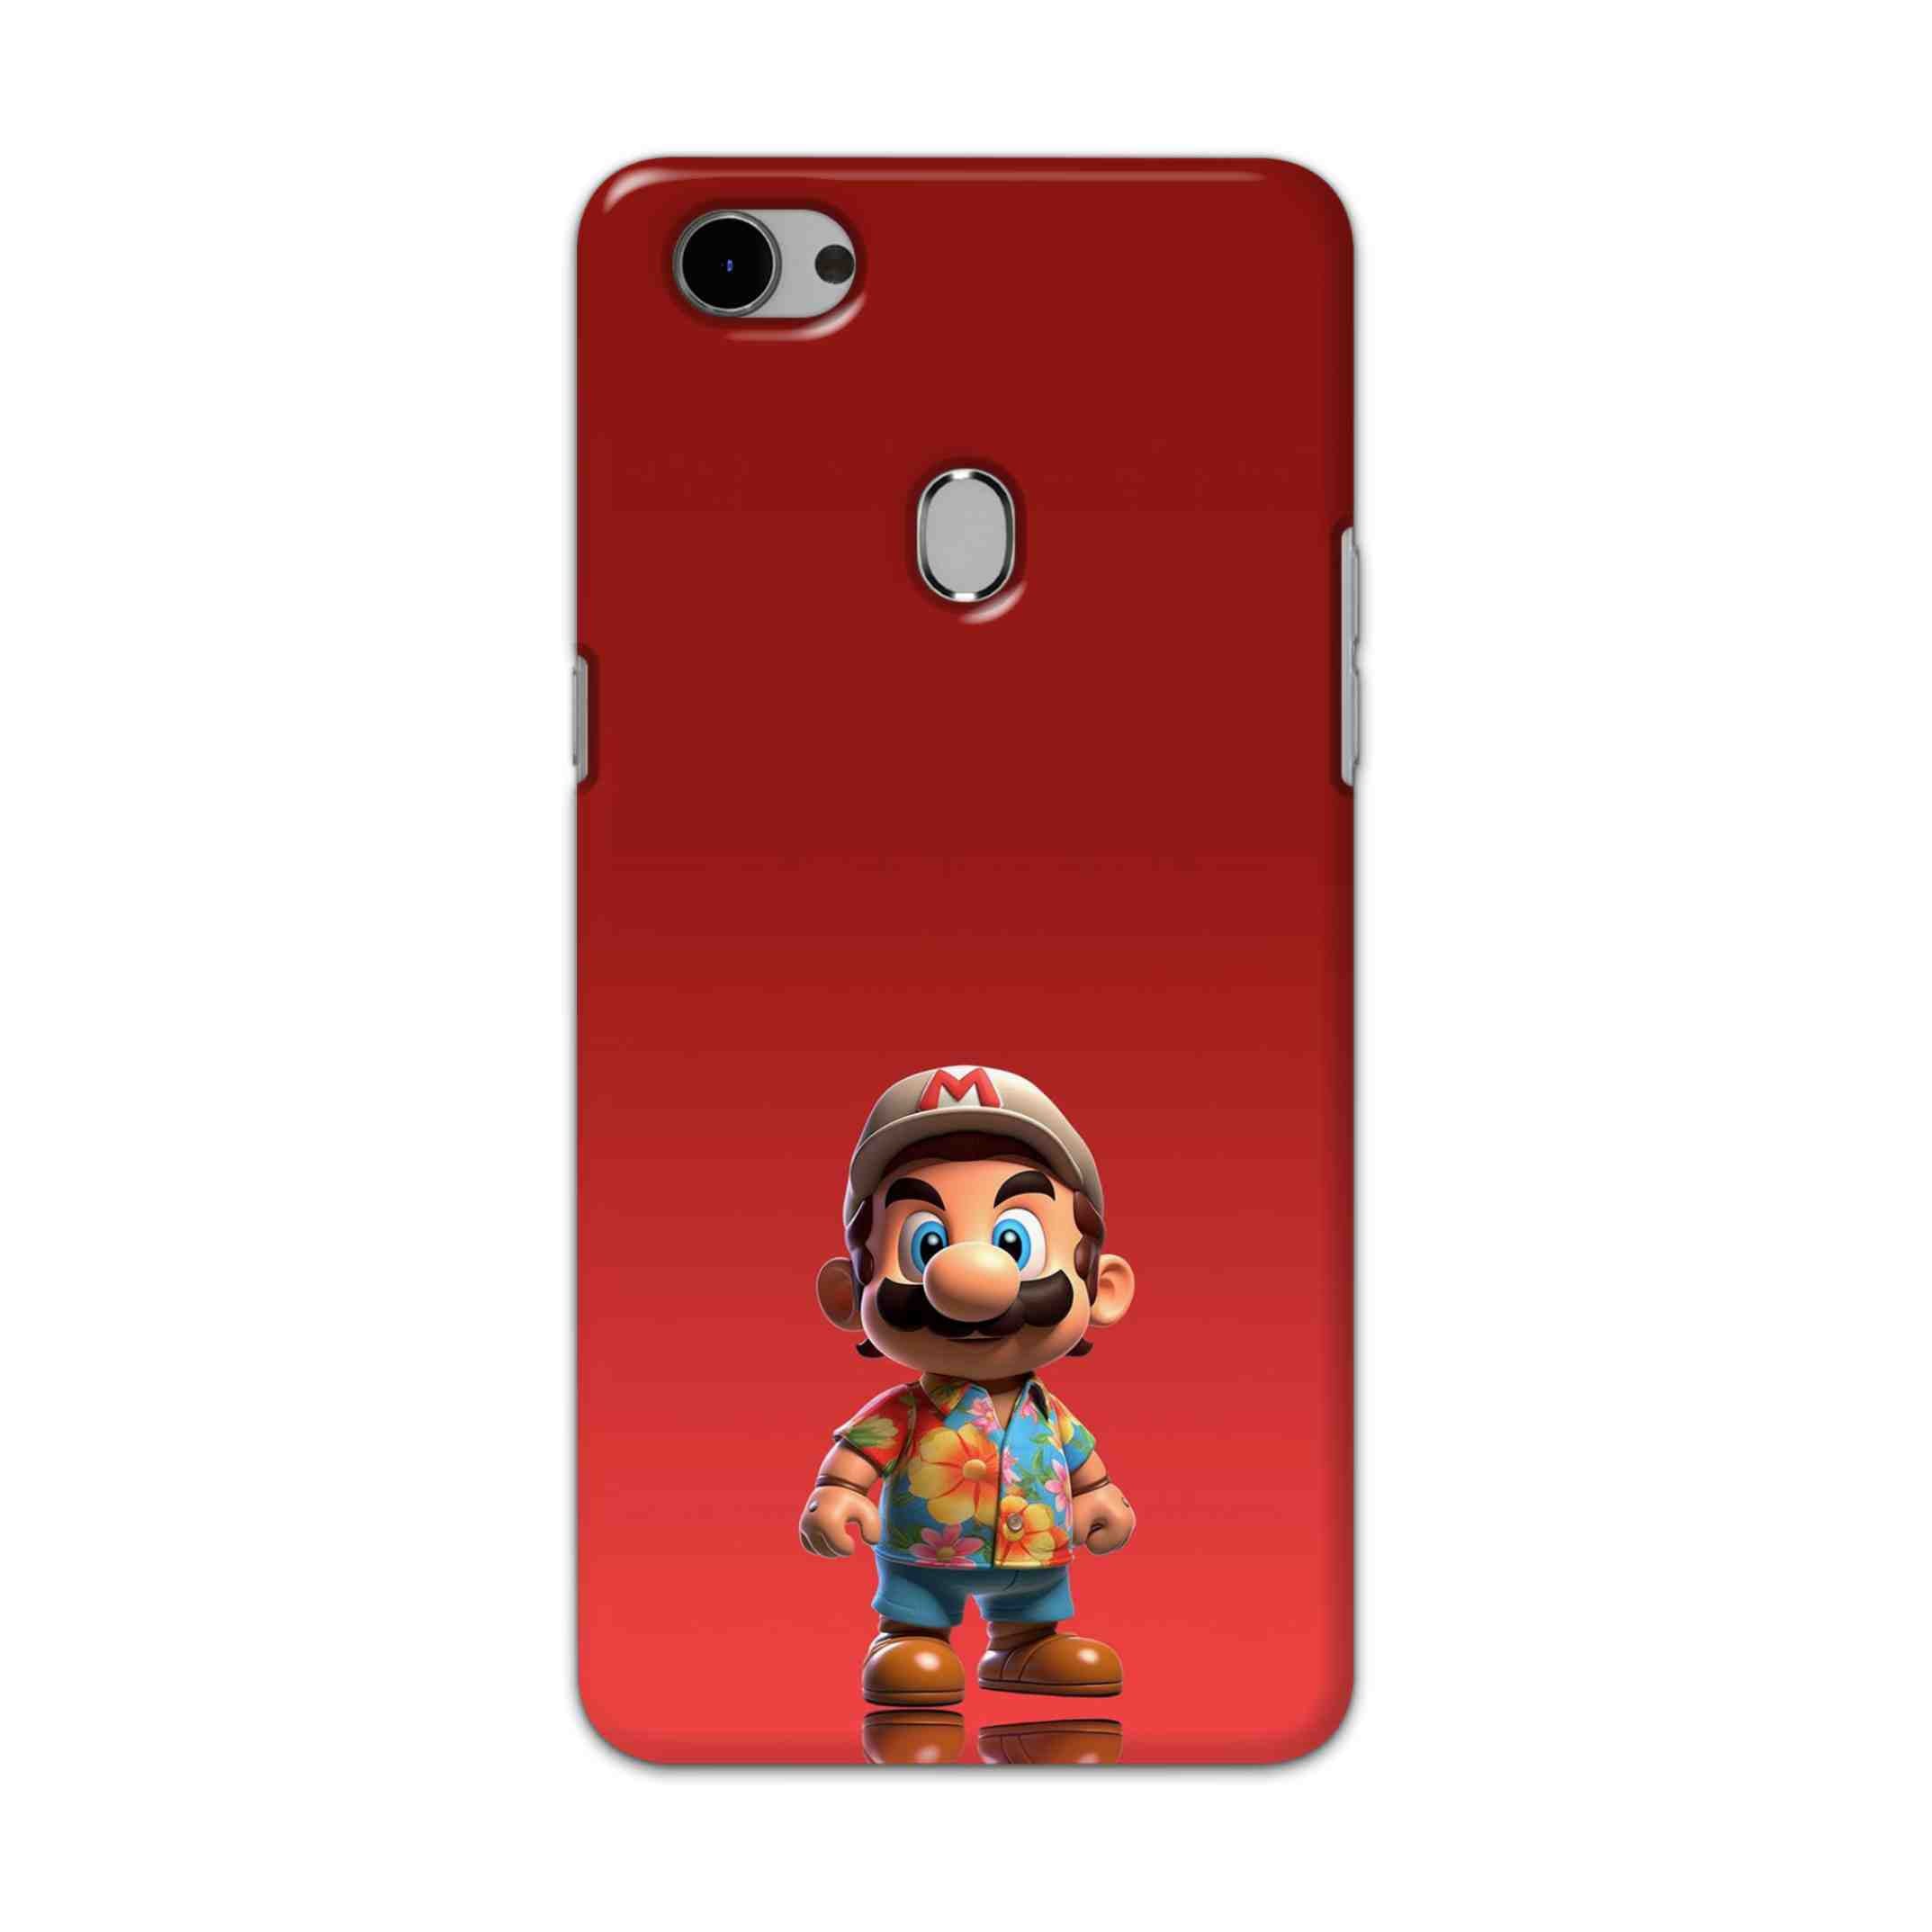 Buy Mario Hard Back Mobile Phone Case Cover For Oppo F7 Online